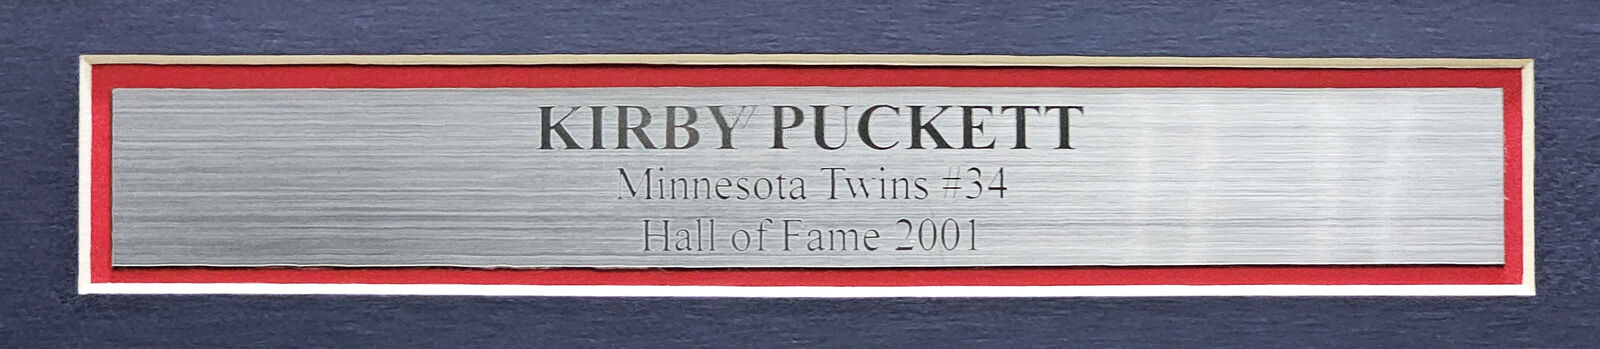 Kirby Puckett Framed Minnesota Twins Jersey 